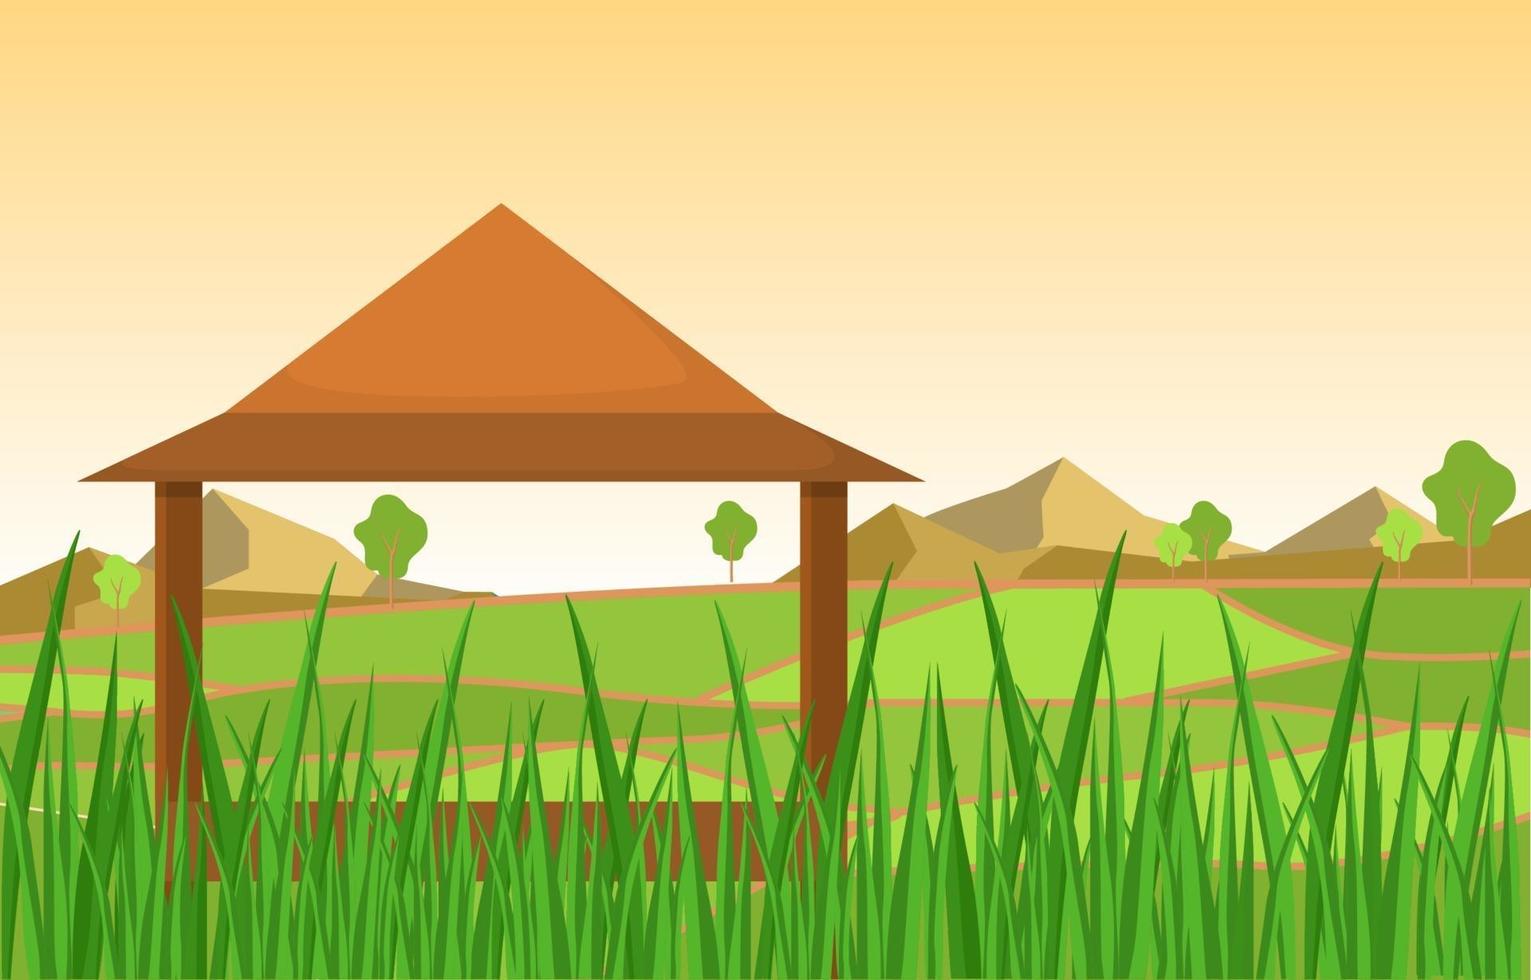 Hut in Asian Rice Field Illustration vector